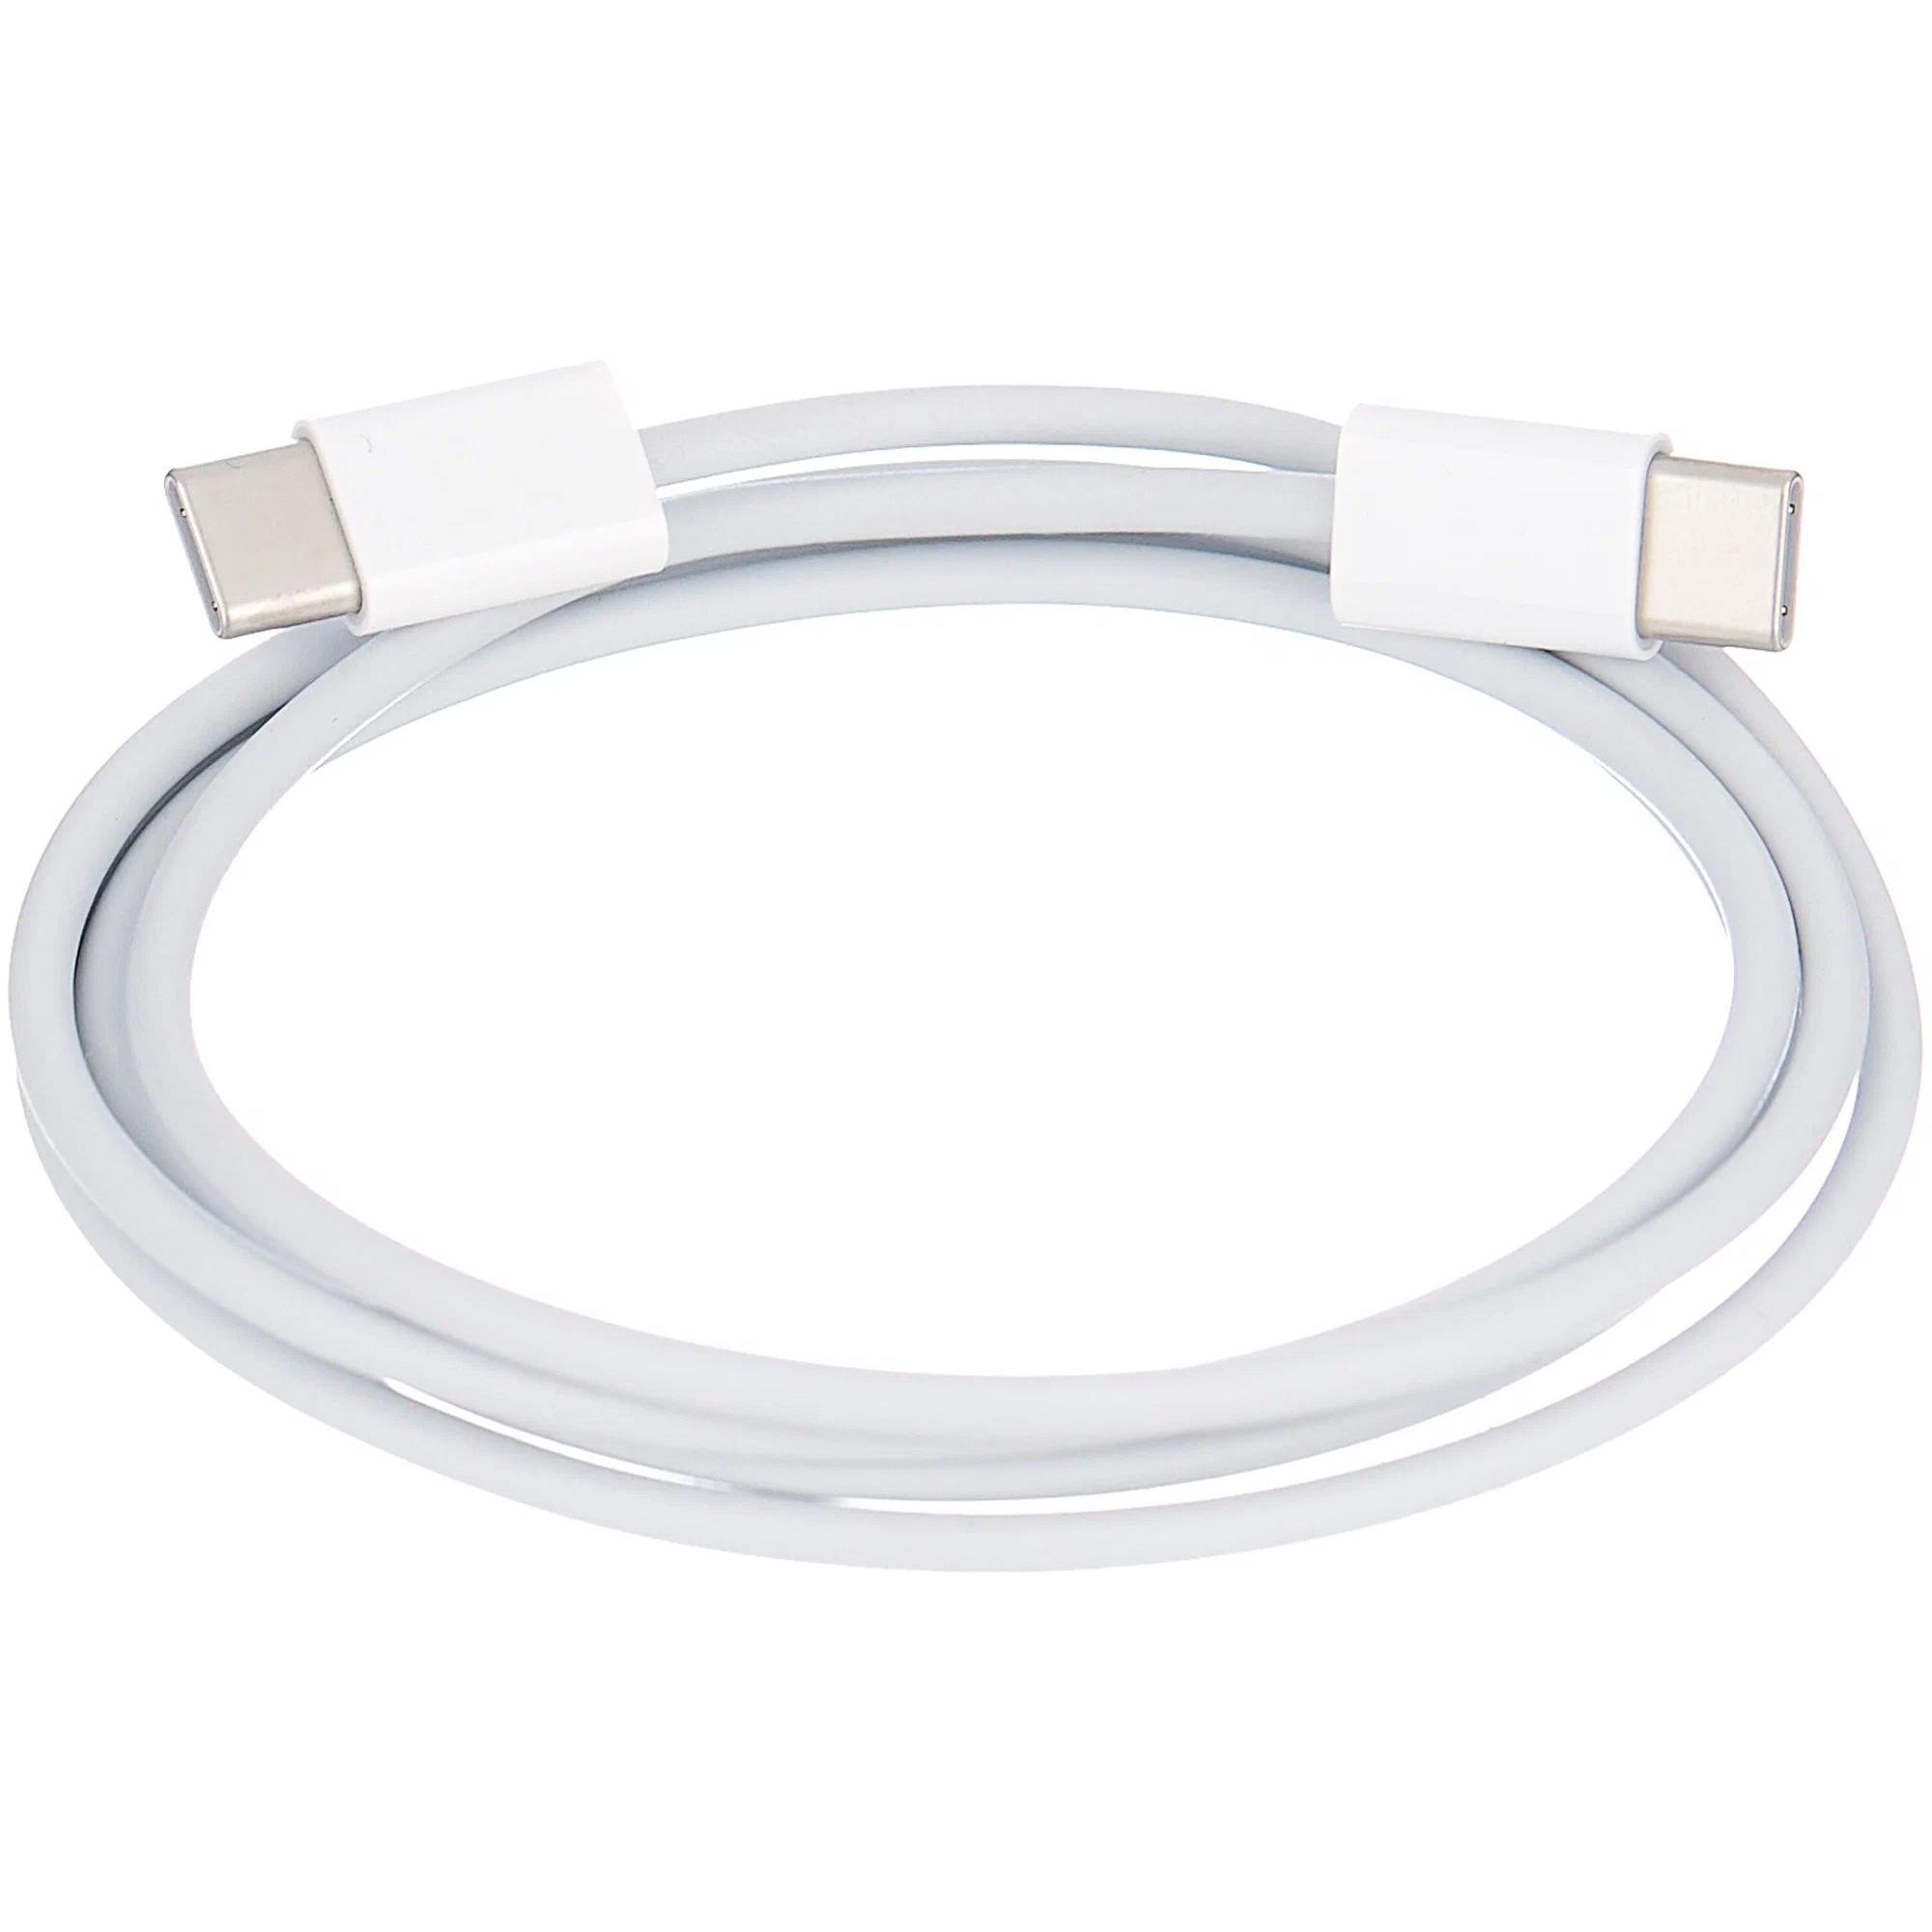 Кабель Apple USB-C Charge Cable (1m) MM093ZM/A чехол обложка mypads стёганная кожа в ромбик с узором для ipad 2 2011 ipad 3 2012 ipad 4 2012 a1395 a1396 a1397 a1416 a1430 a140